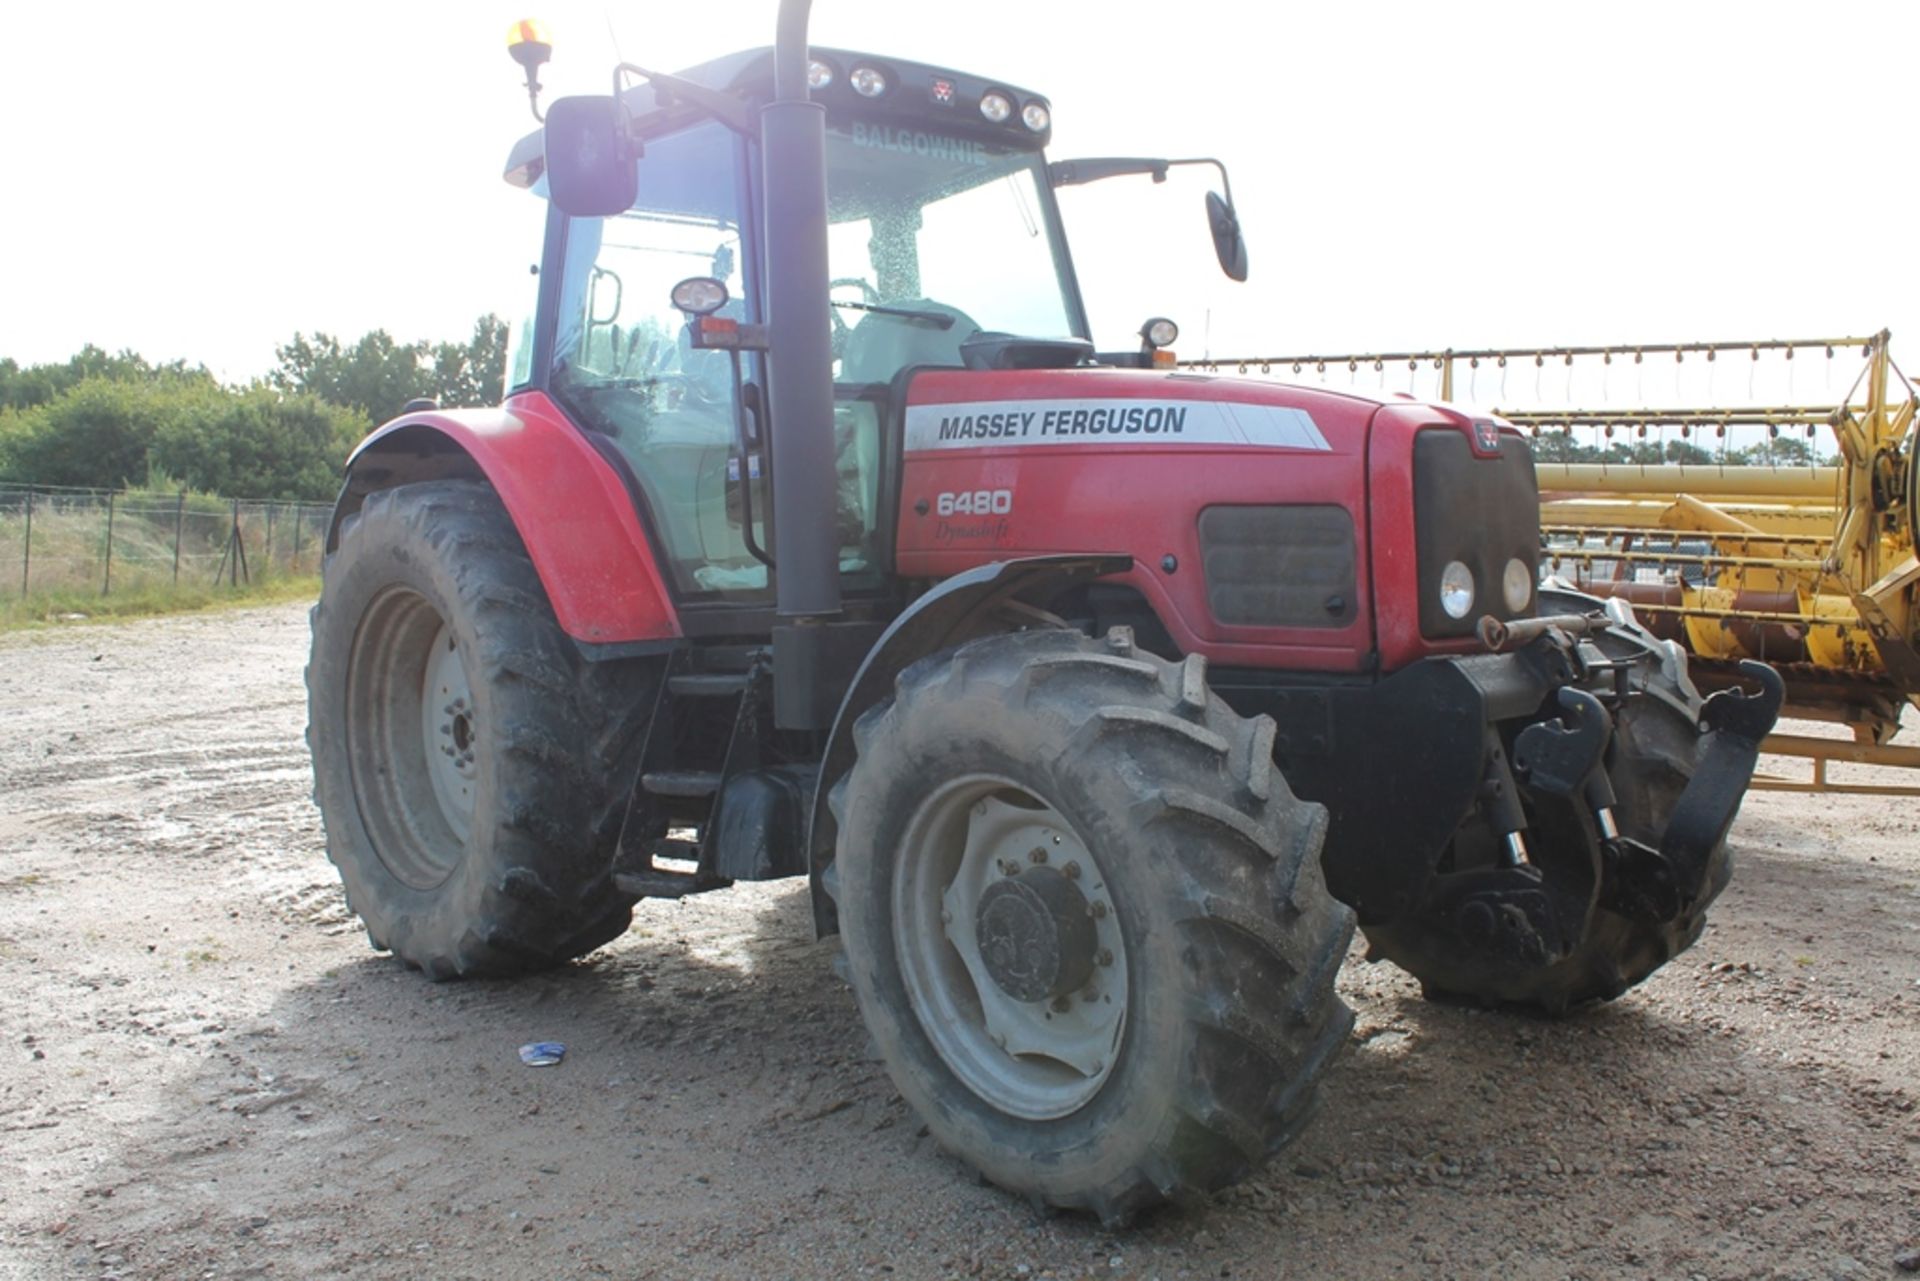 Massey Ferguson 6480 Tractor - Image 5 of 6